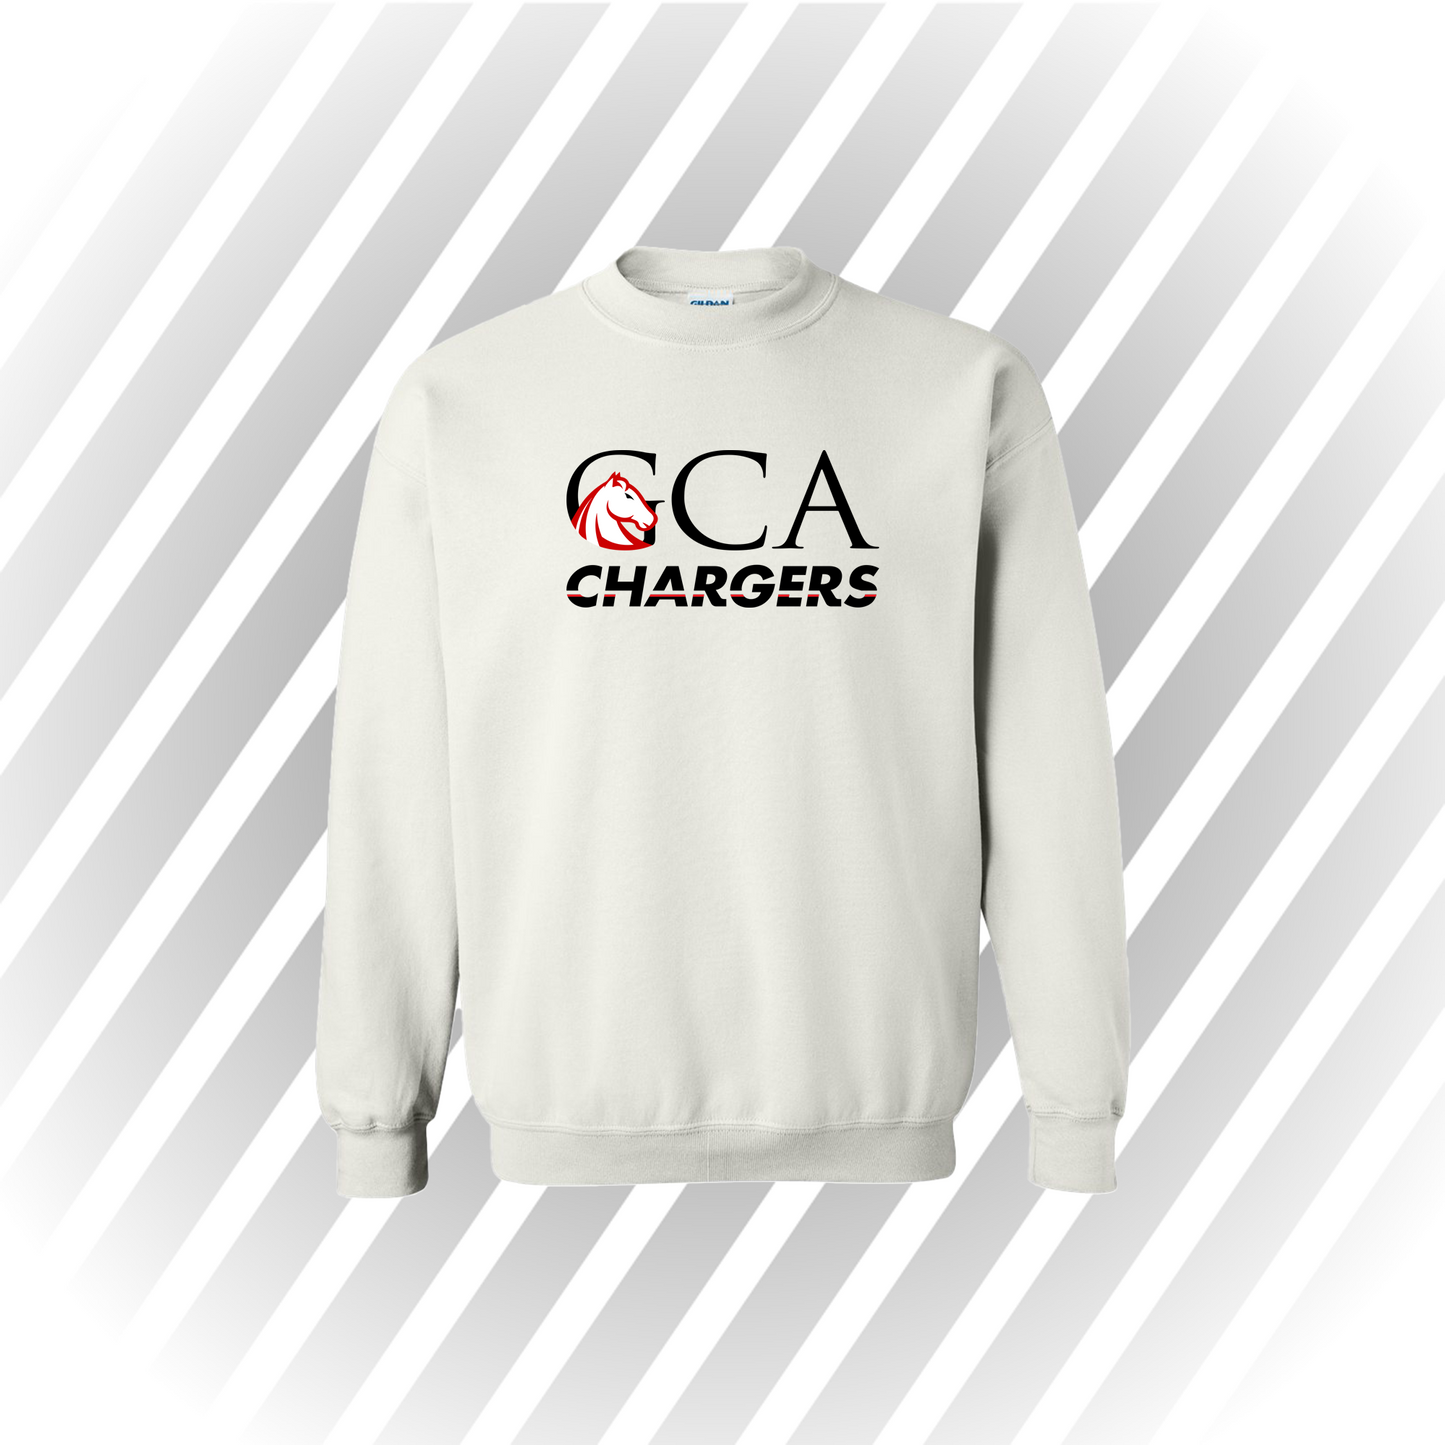 GCA Chargers - Crewneck Sweater